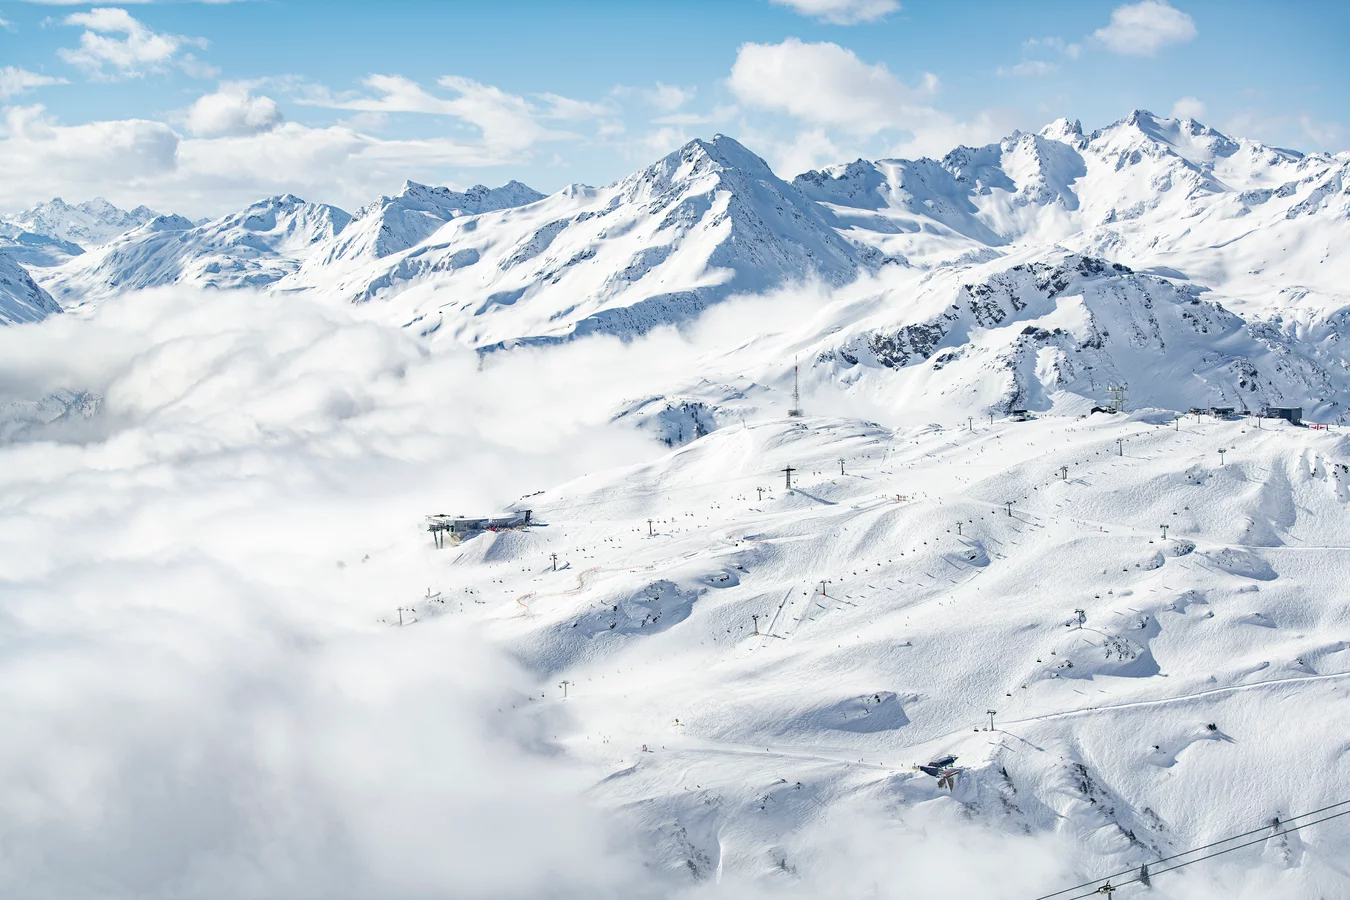 The ski resort at a glance | St. Anton am Arlberg